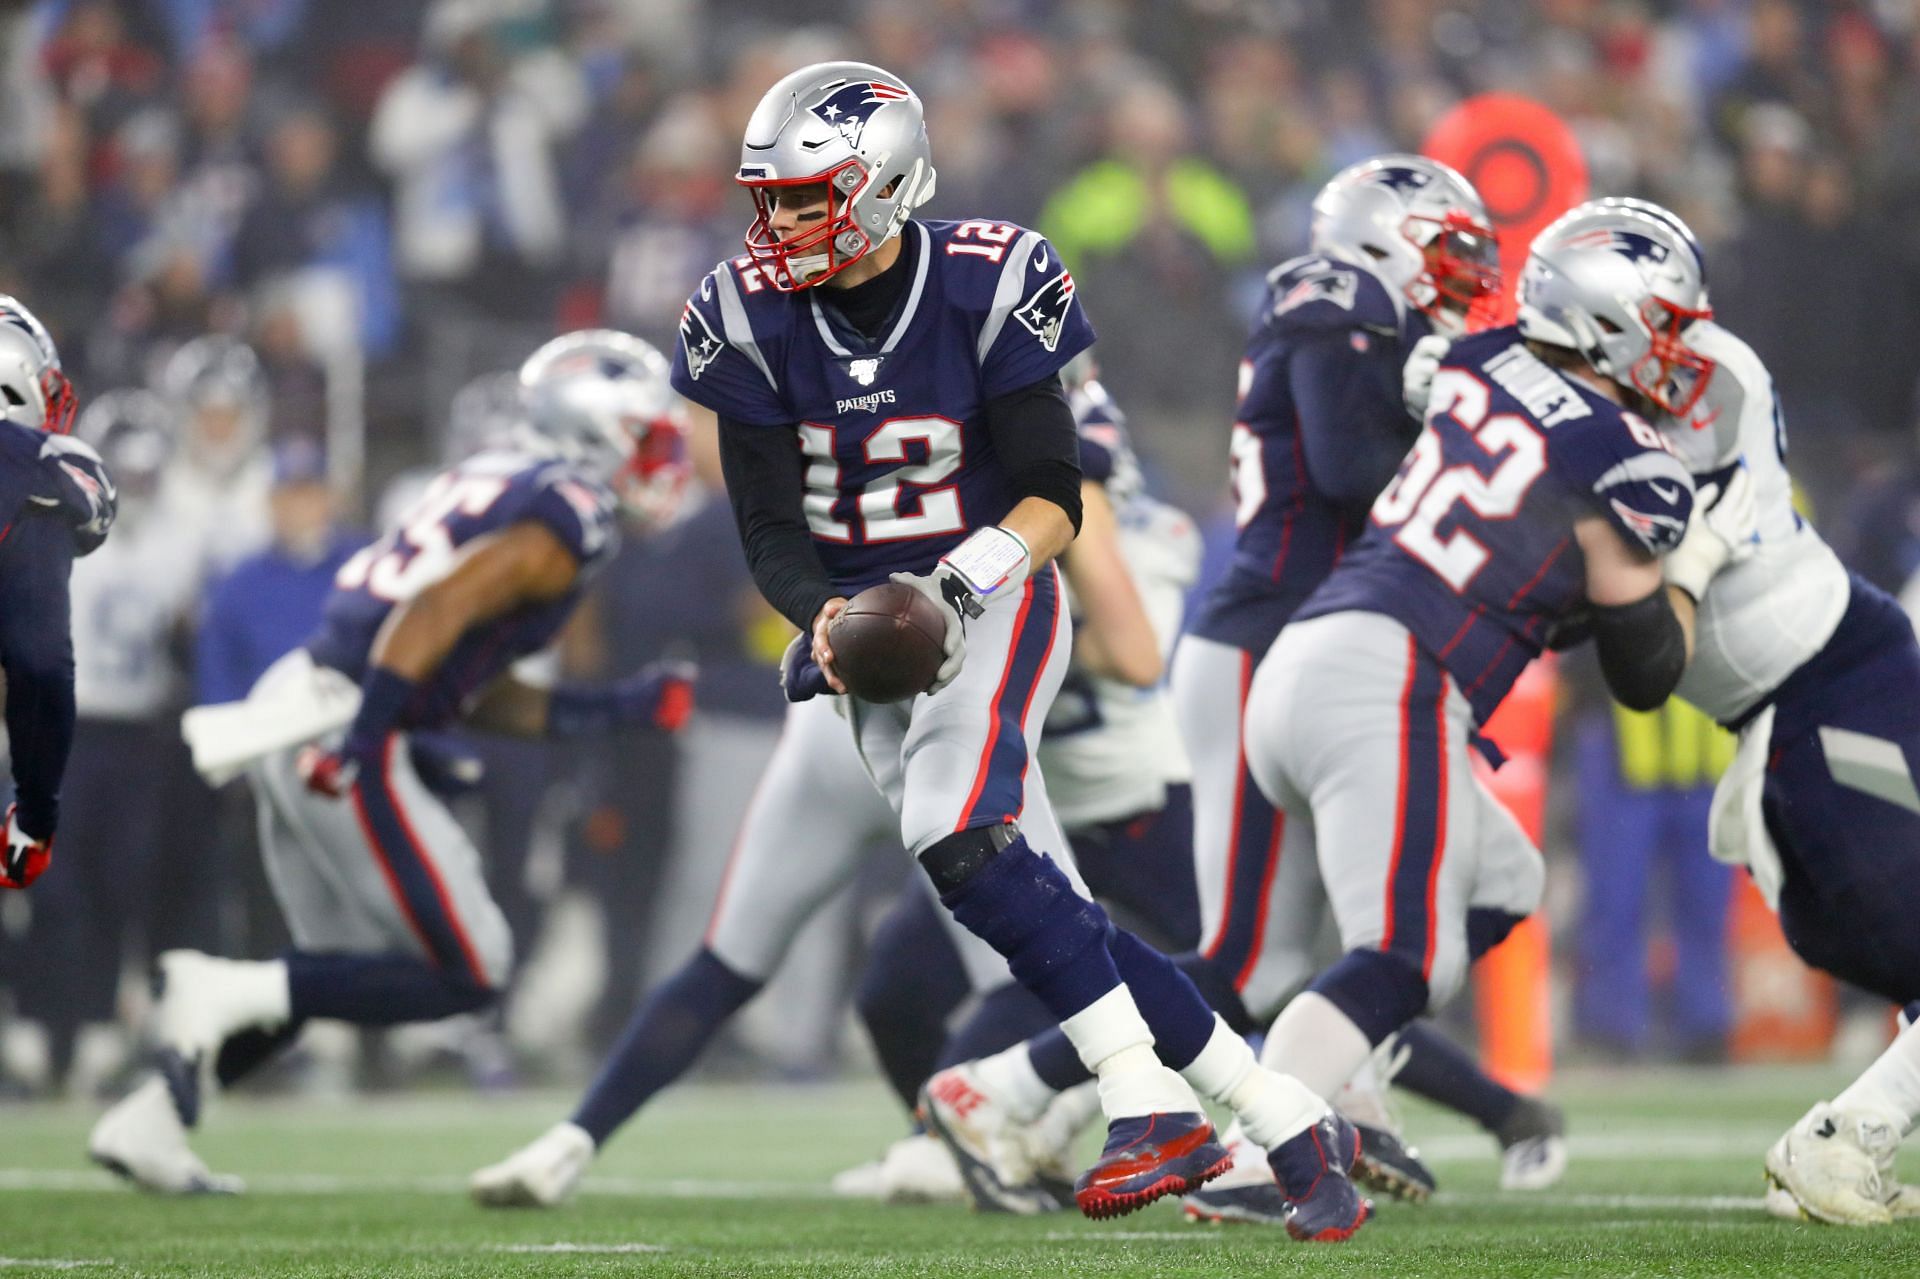 New England Patriots legend Tom Brady